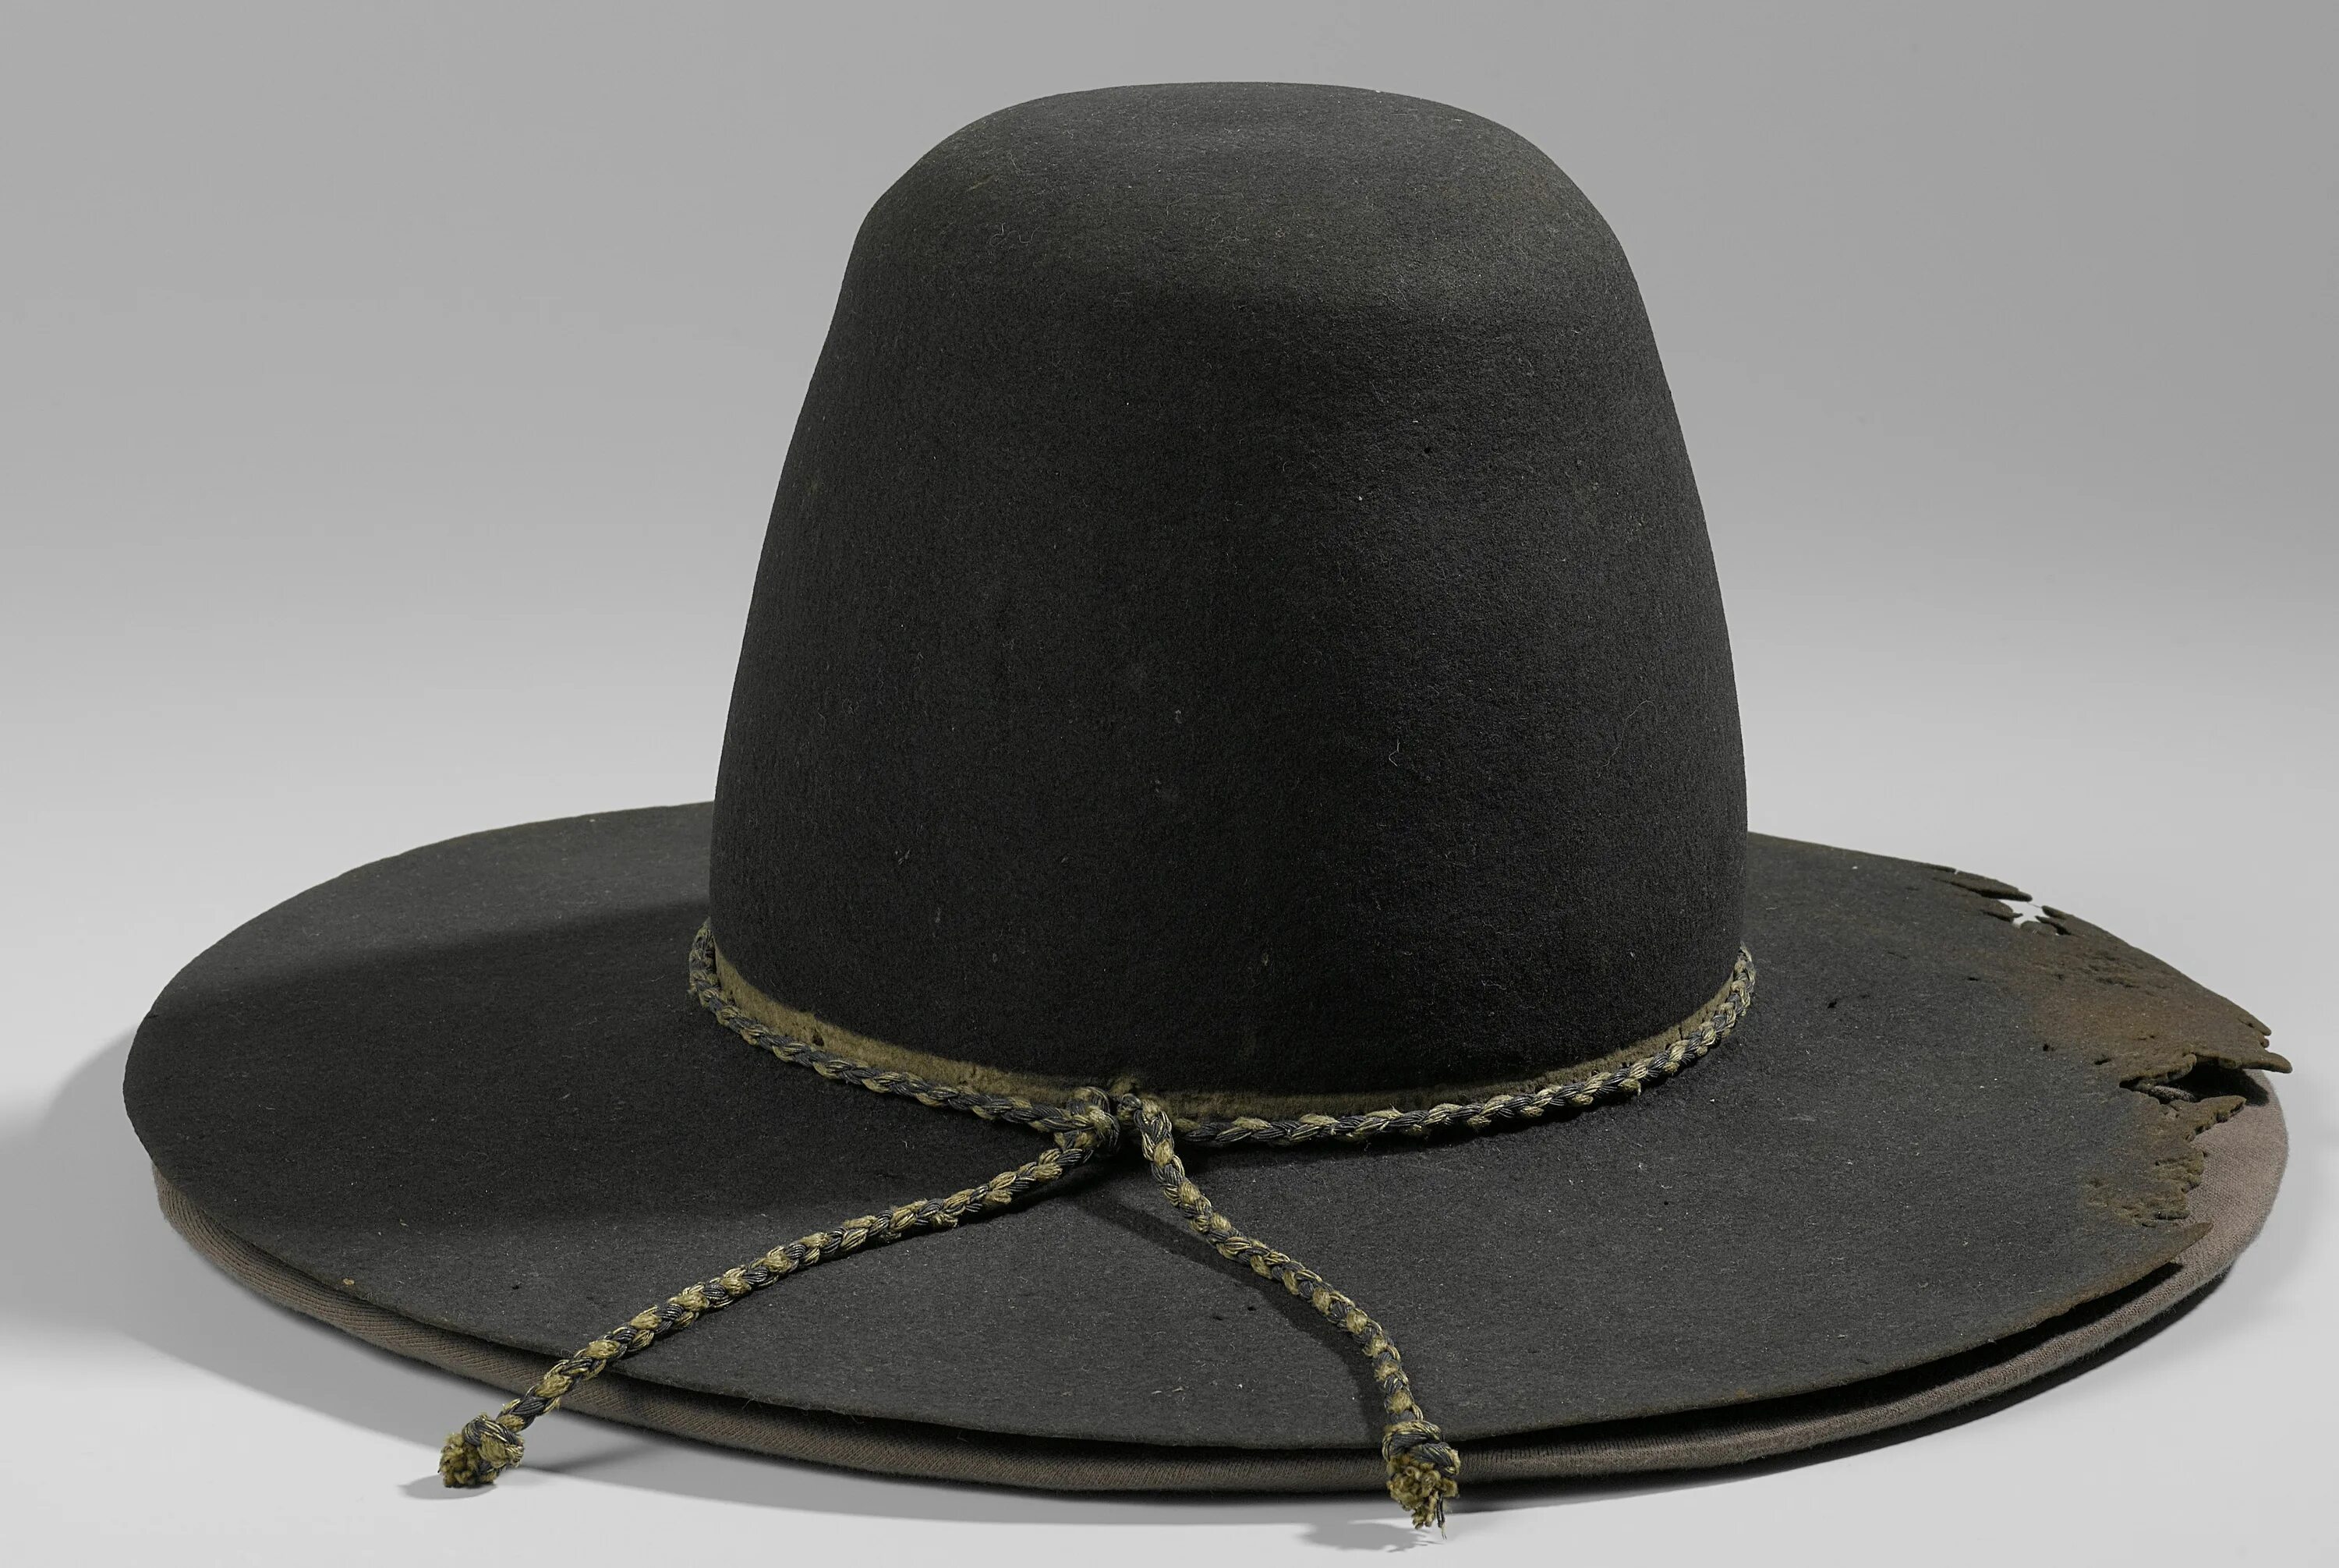 Широкополая шляпа мужская 17 века. Широкополая шляпа 17 век. Широкополая шляпа мужская 19 века. Широкополая мужская шляпа 16 век. Шляпа 17 века